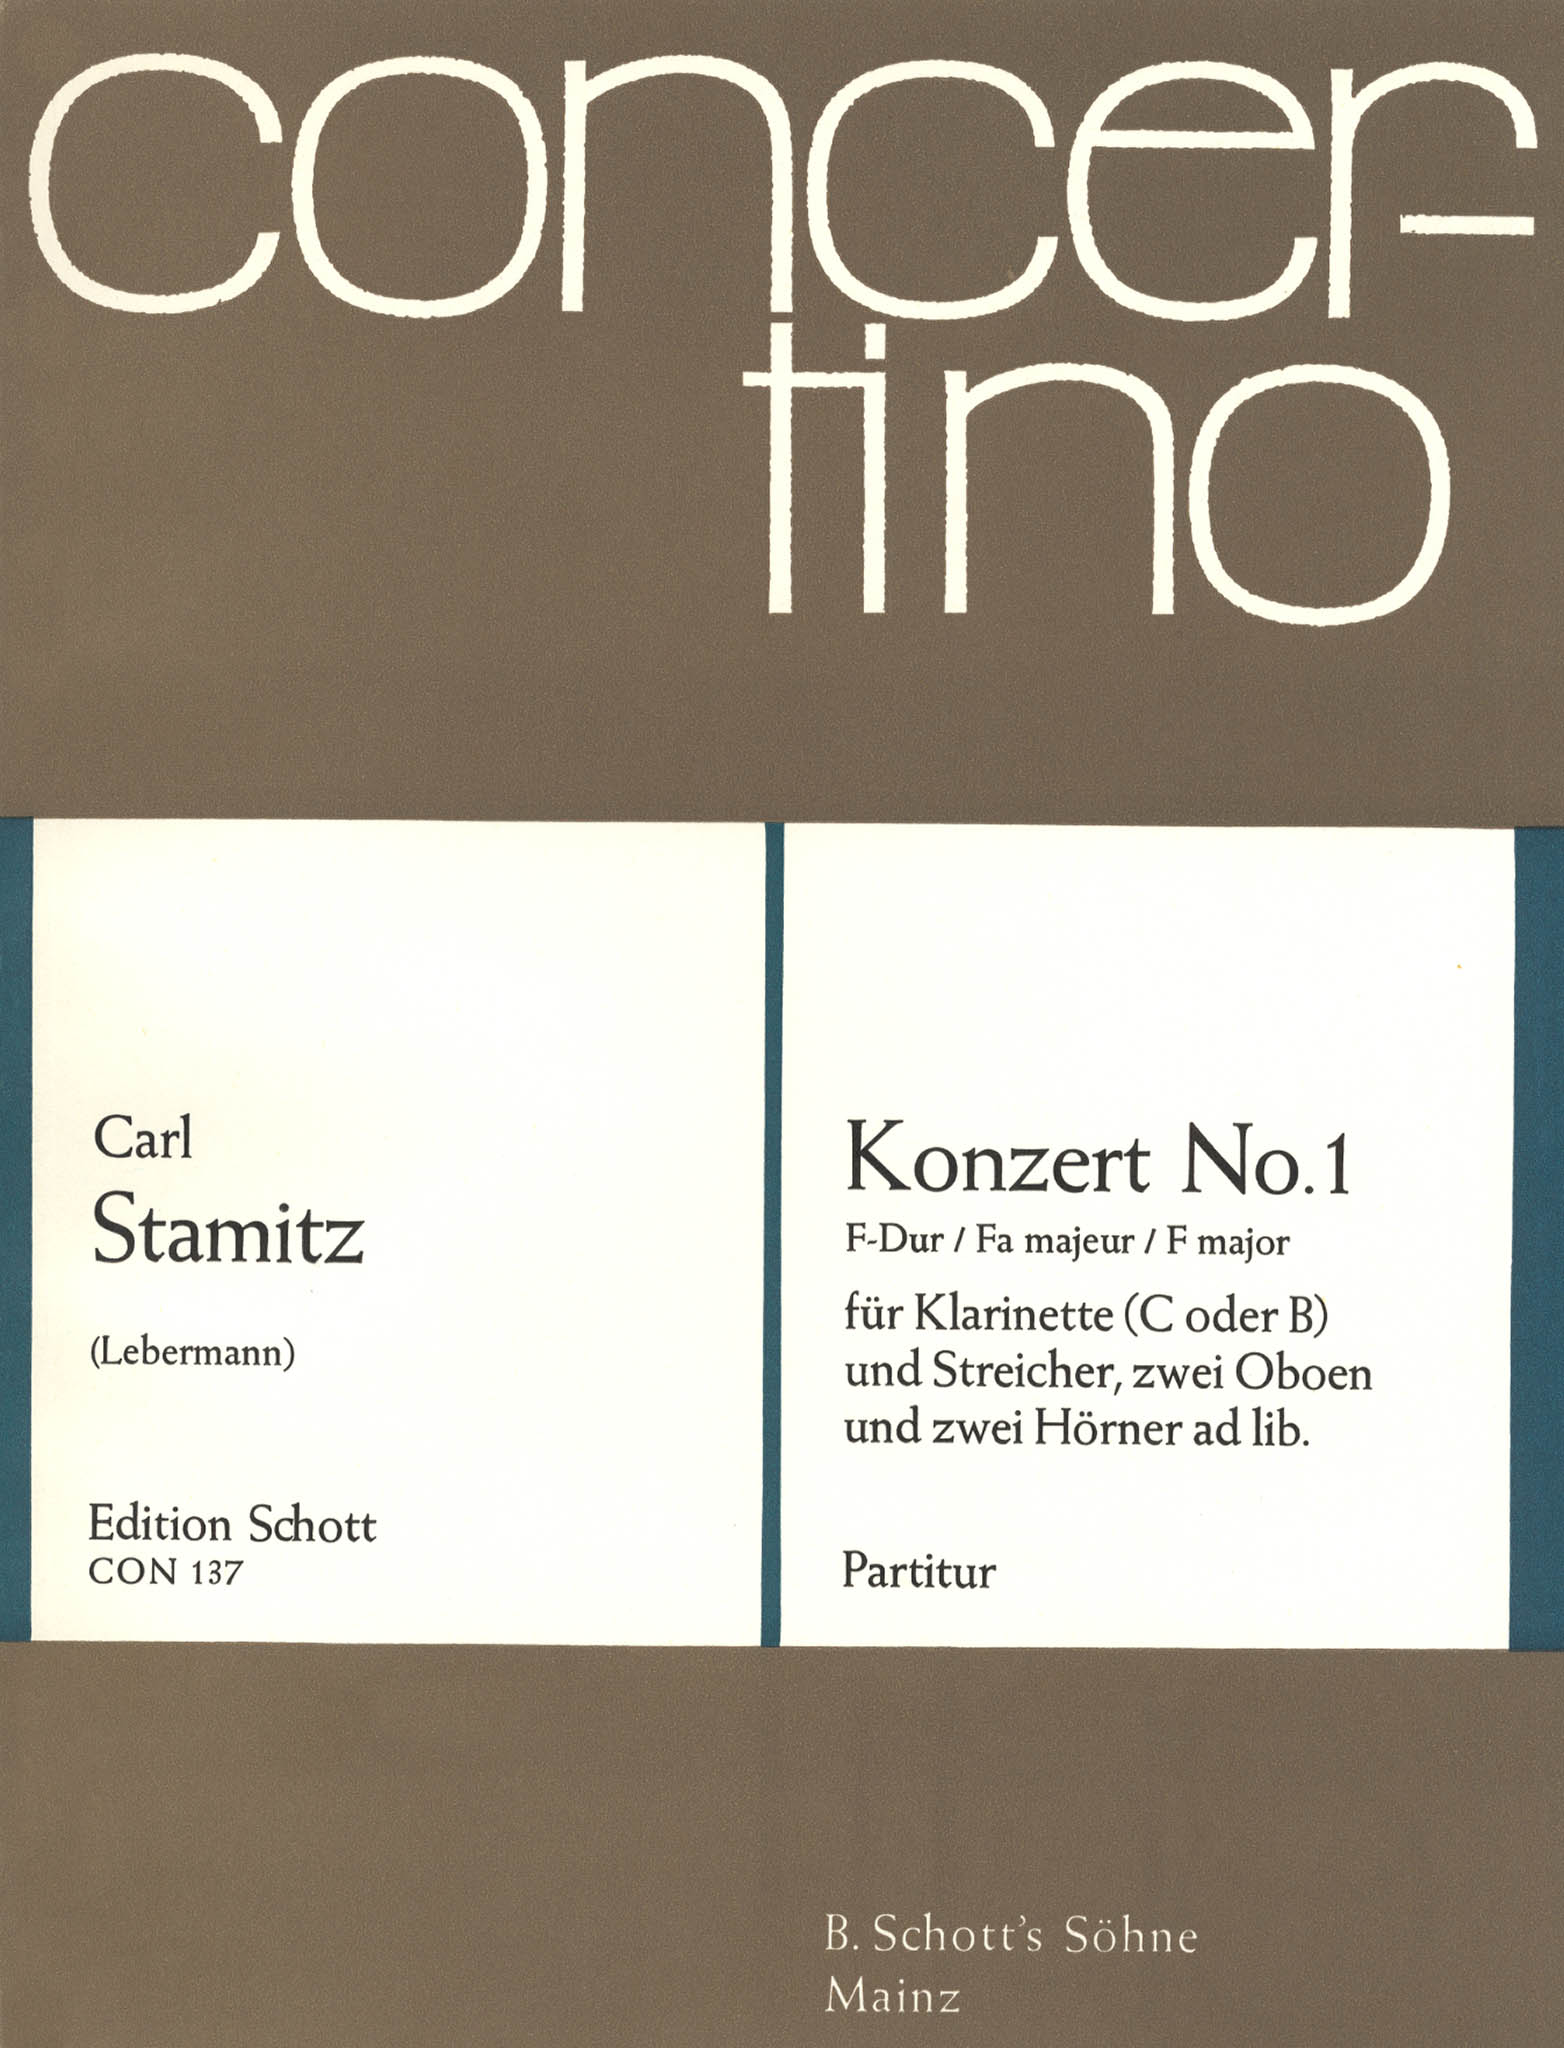 Carl Stamitz Clarinet Concerto No. 1 (Kaiser) in F Major full score cover